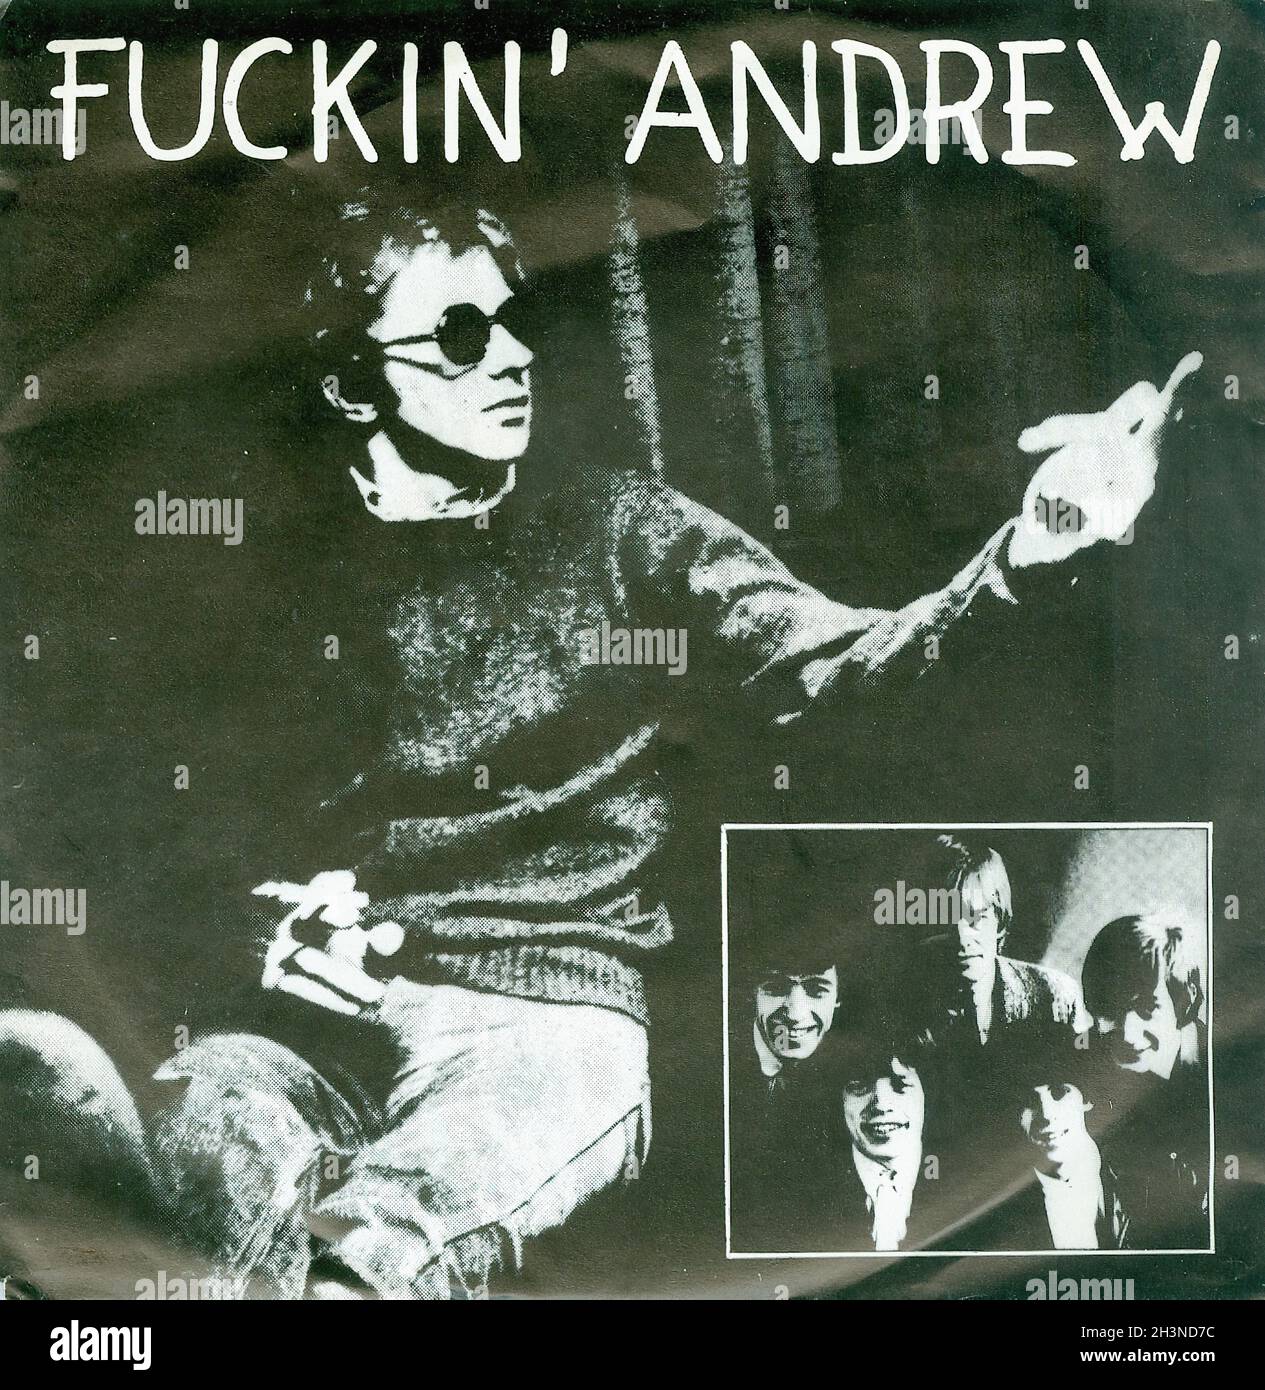 Vintage Vinyl Recording - Rolling Stones, The - Fuckin' Andrews - UK - early 1970s 02 Stock Photo